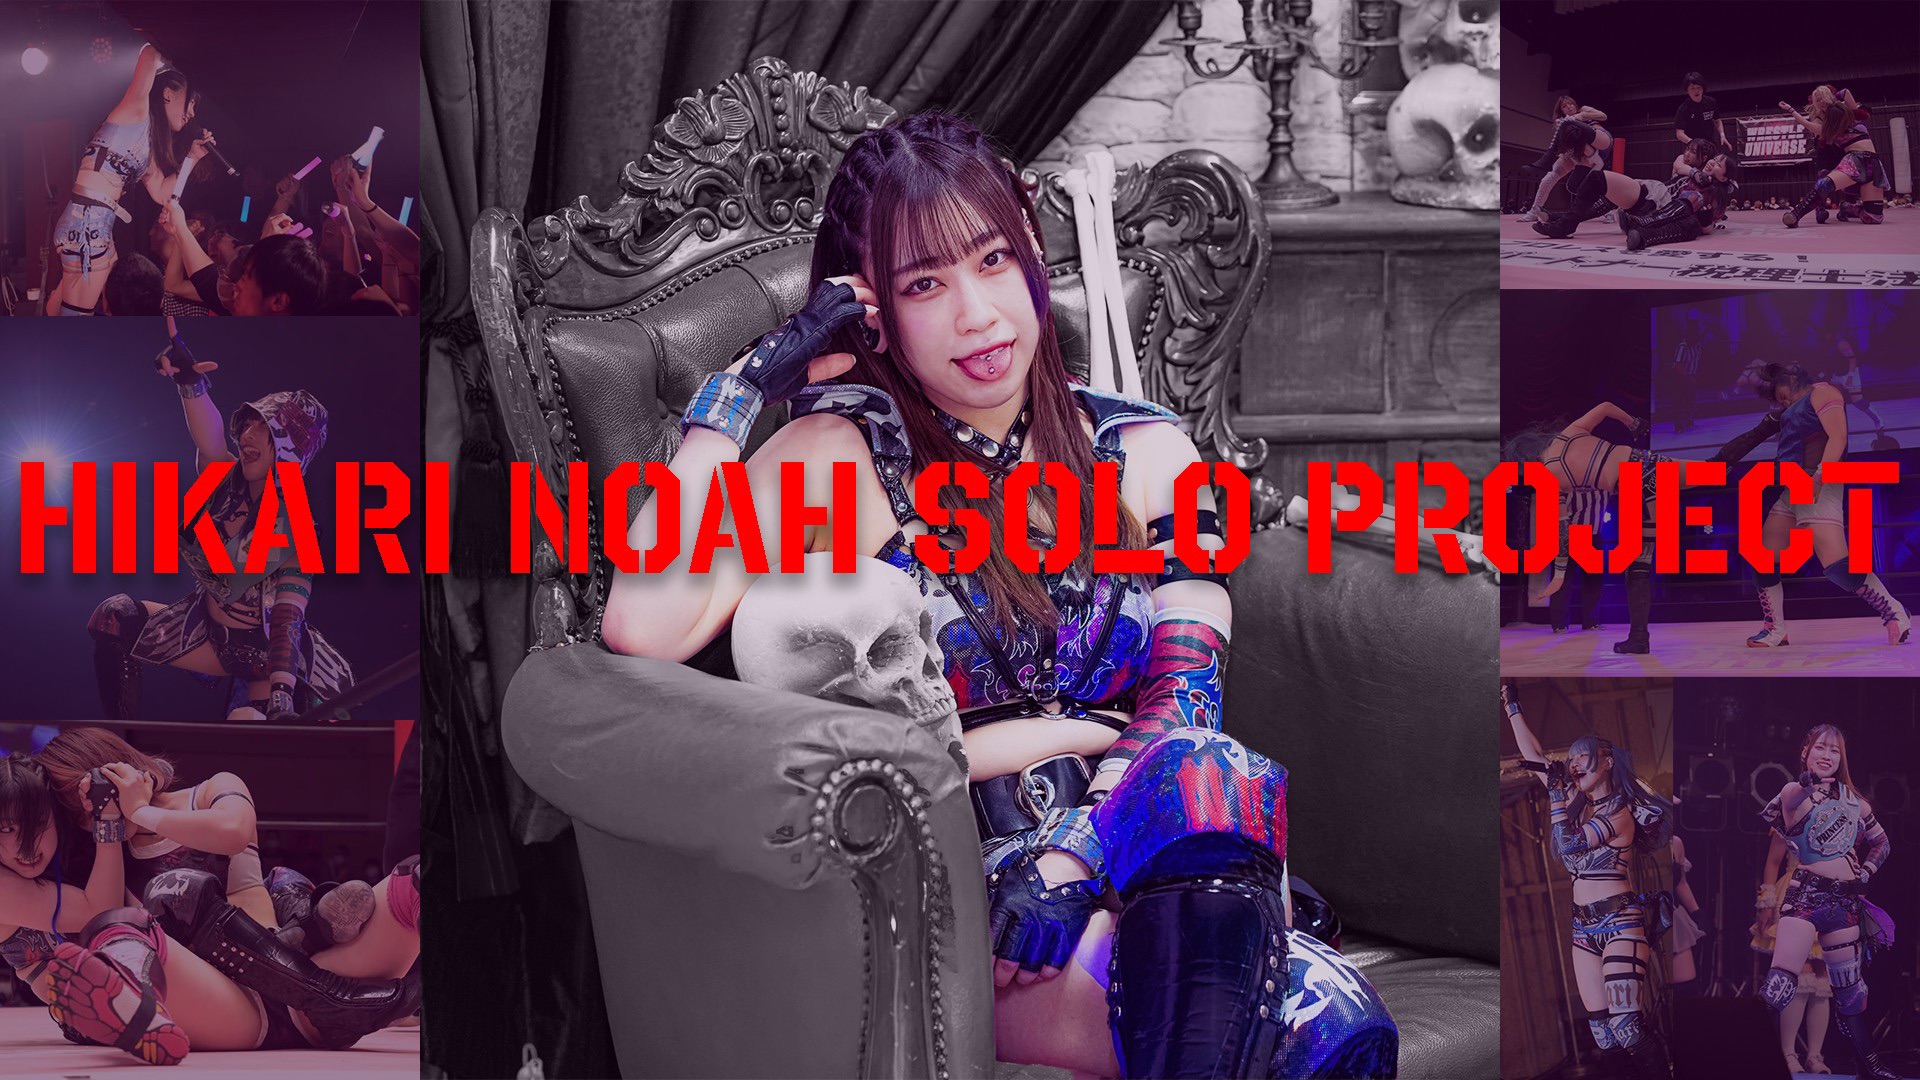 HIKARI NOAH Solo Projectの画像